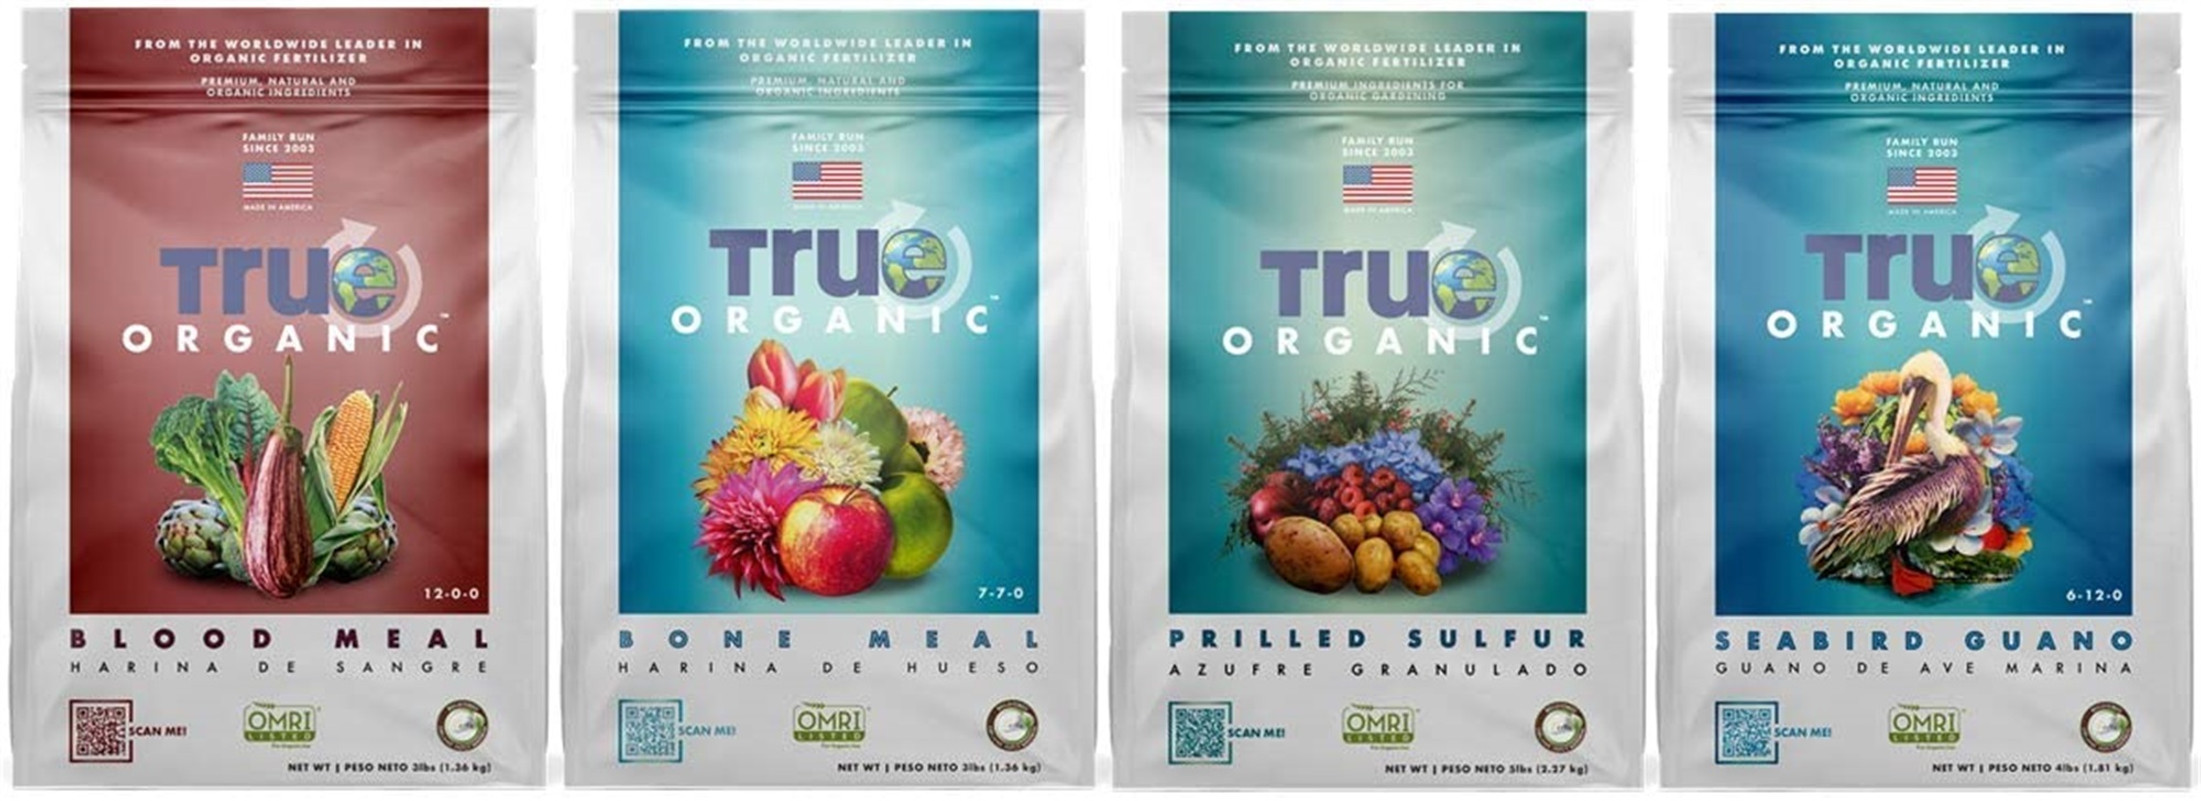 True Organic Seabird Guano 4 lb bag